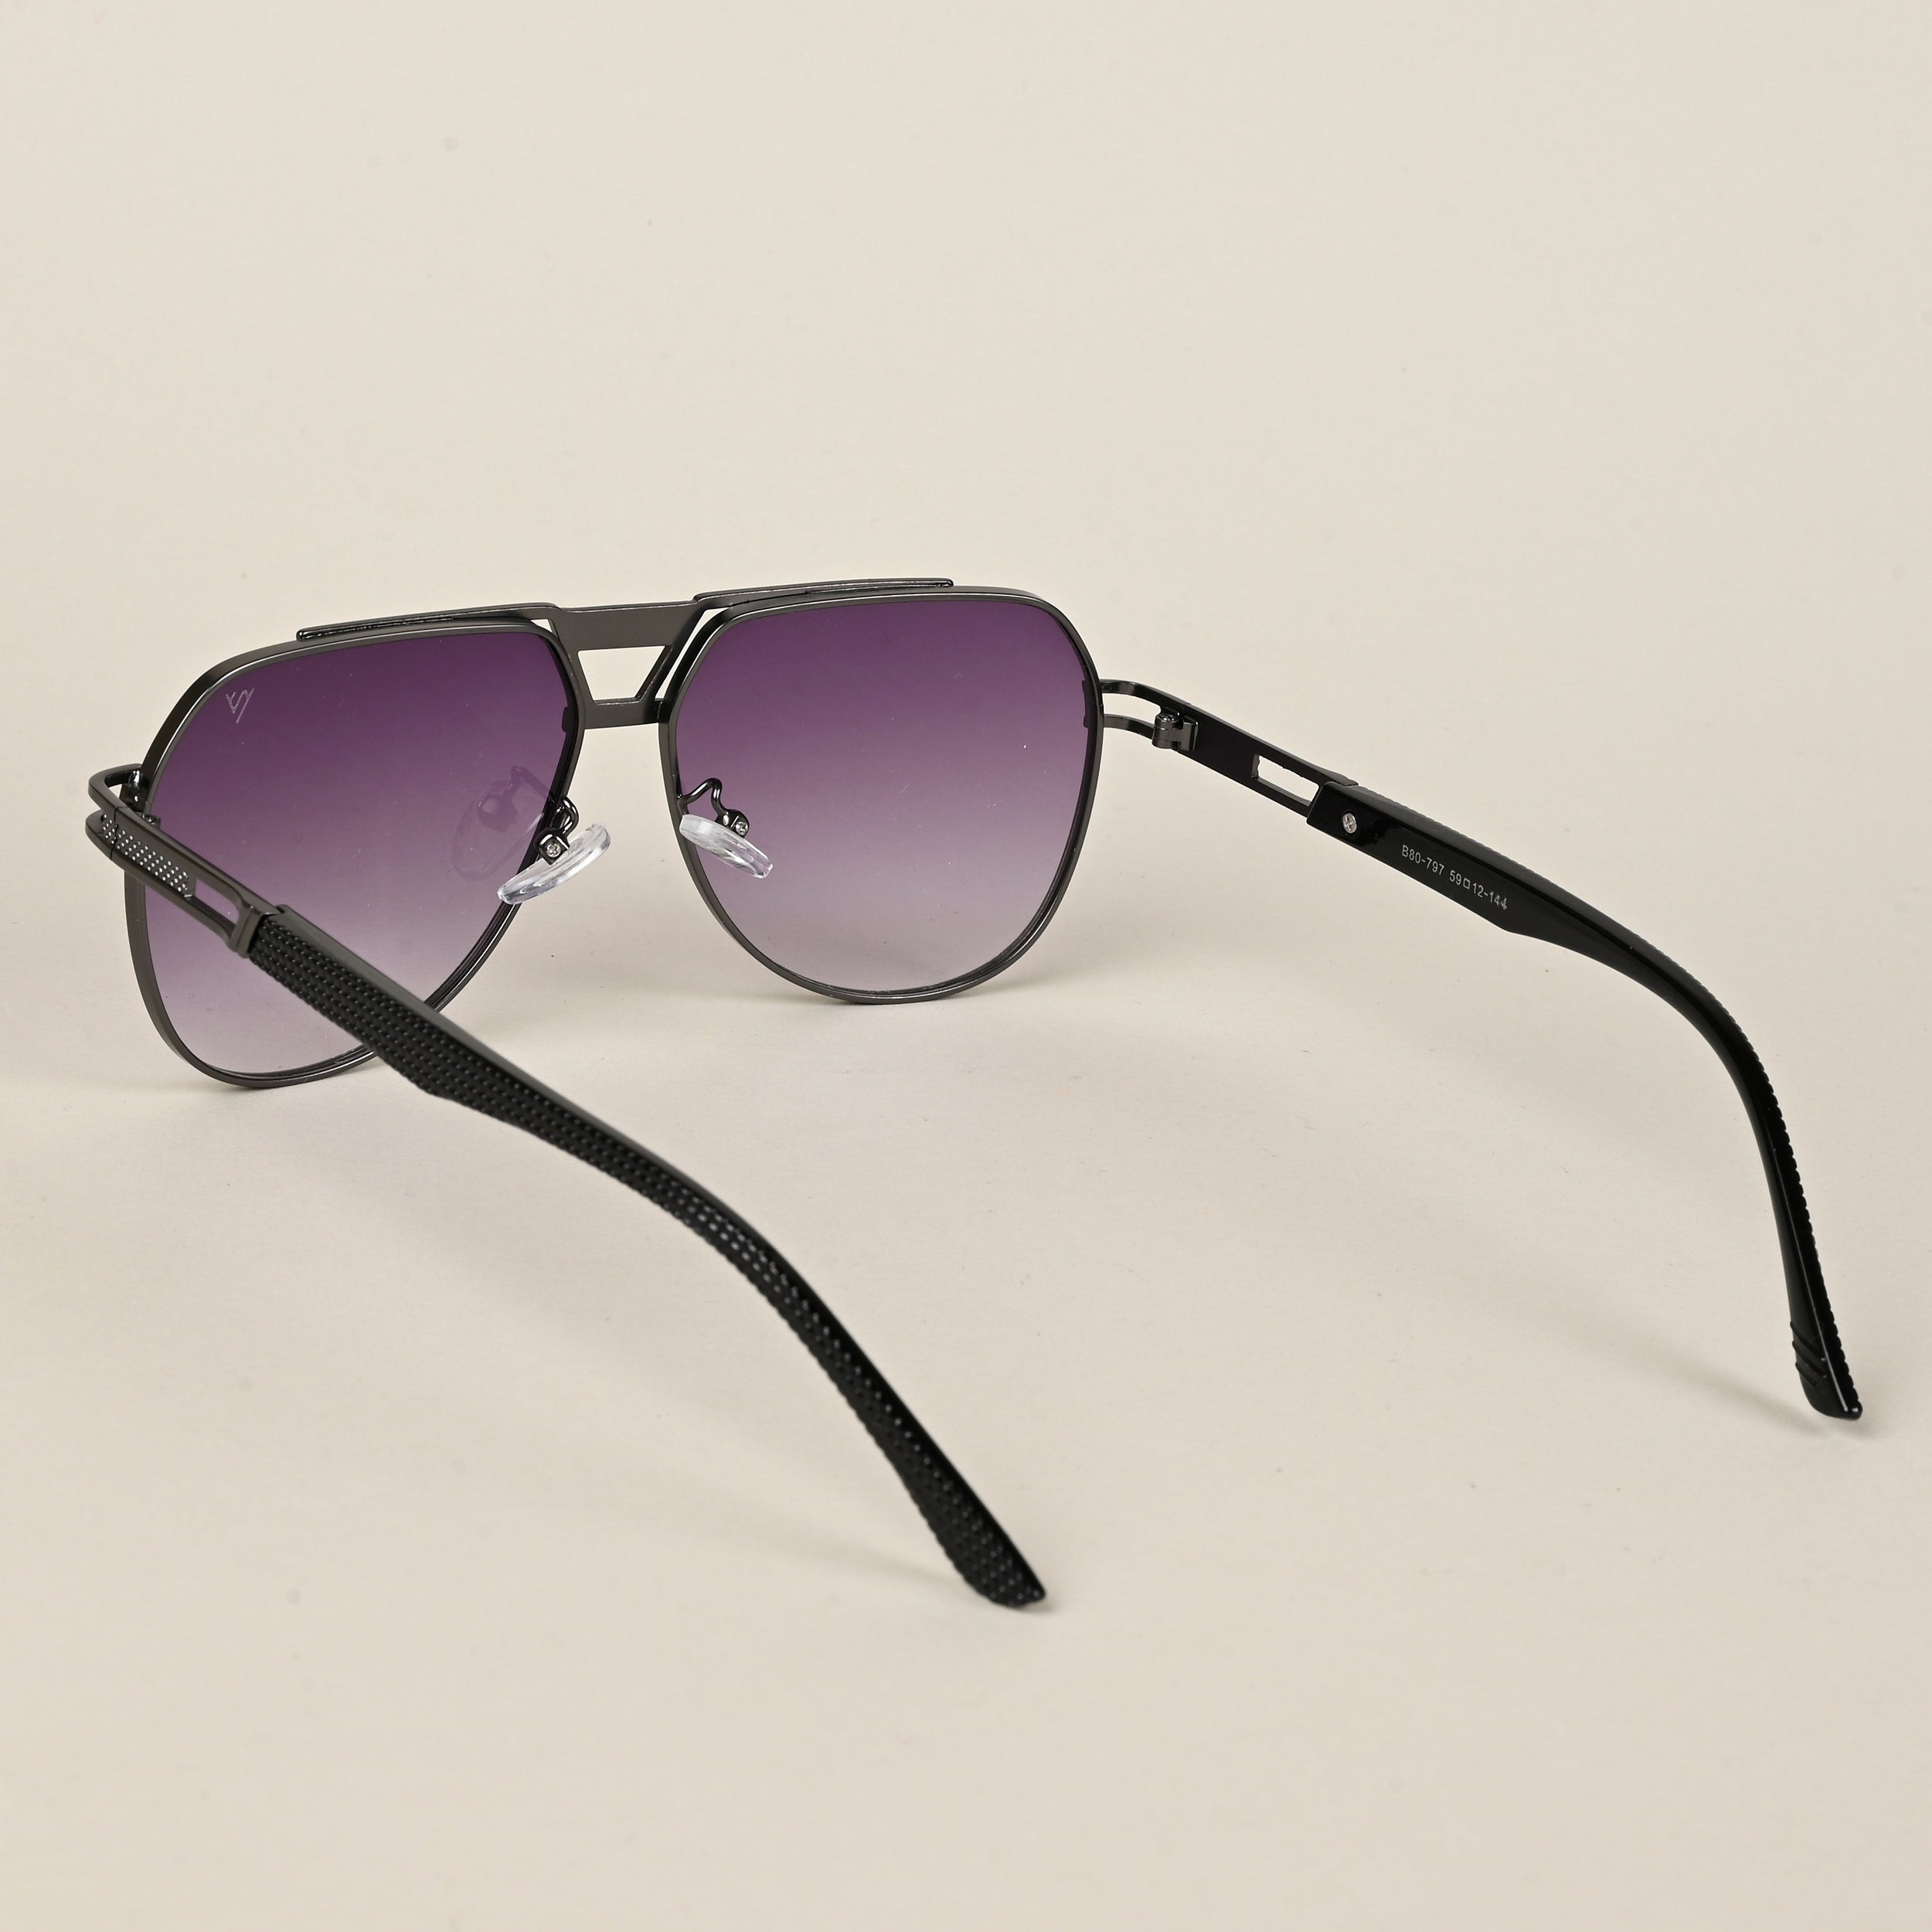 Voyage Aviator Sunglasses for Men & Women (Purple & Clear Lens | Grey Frame  - MG5202)